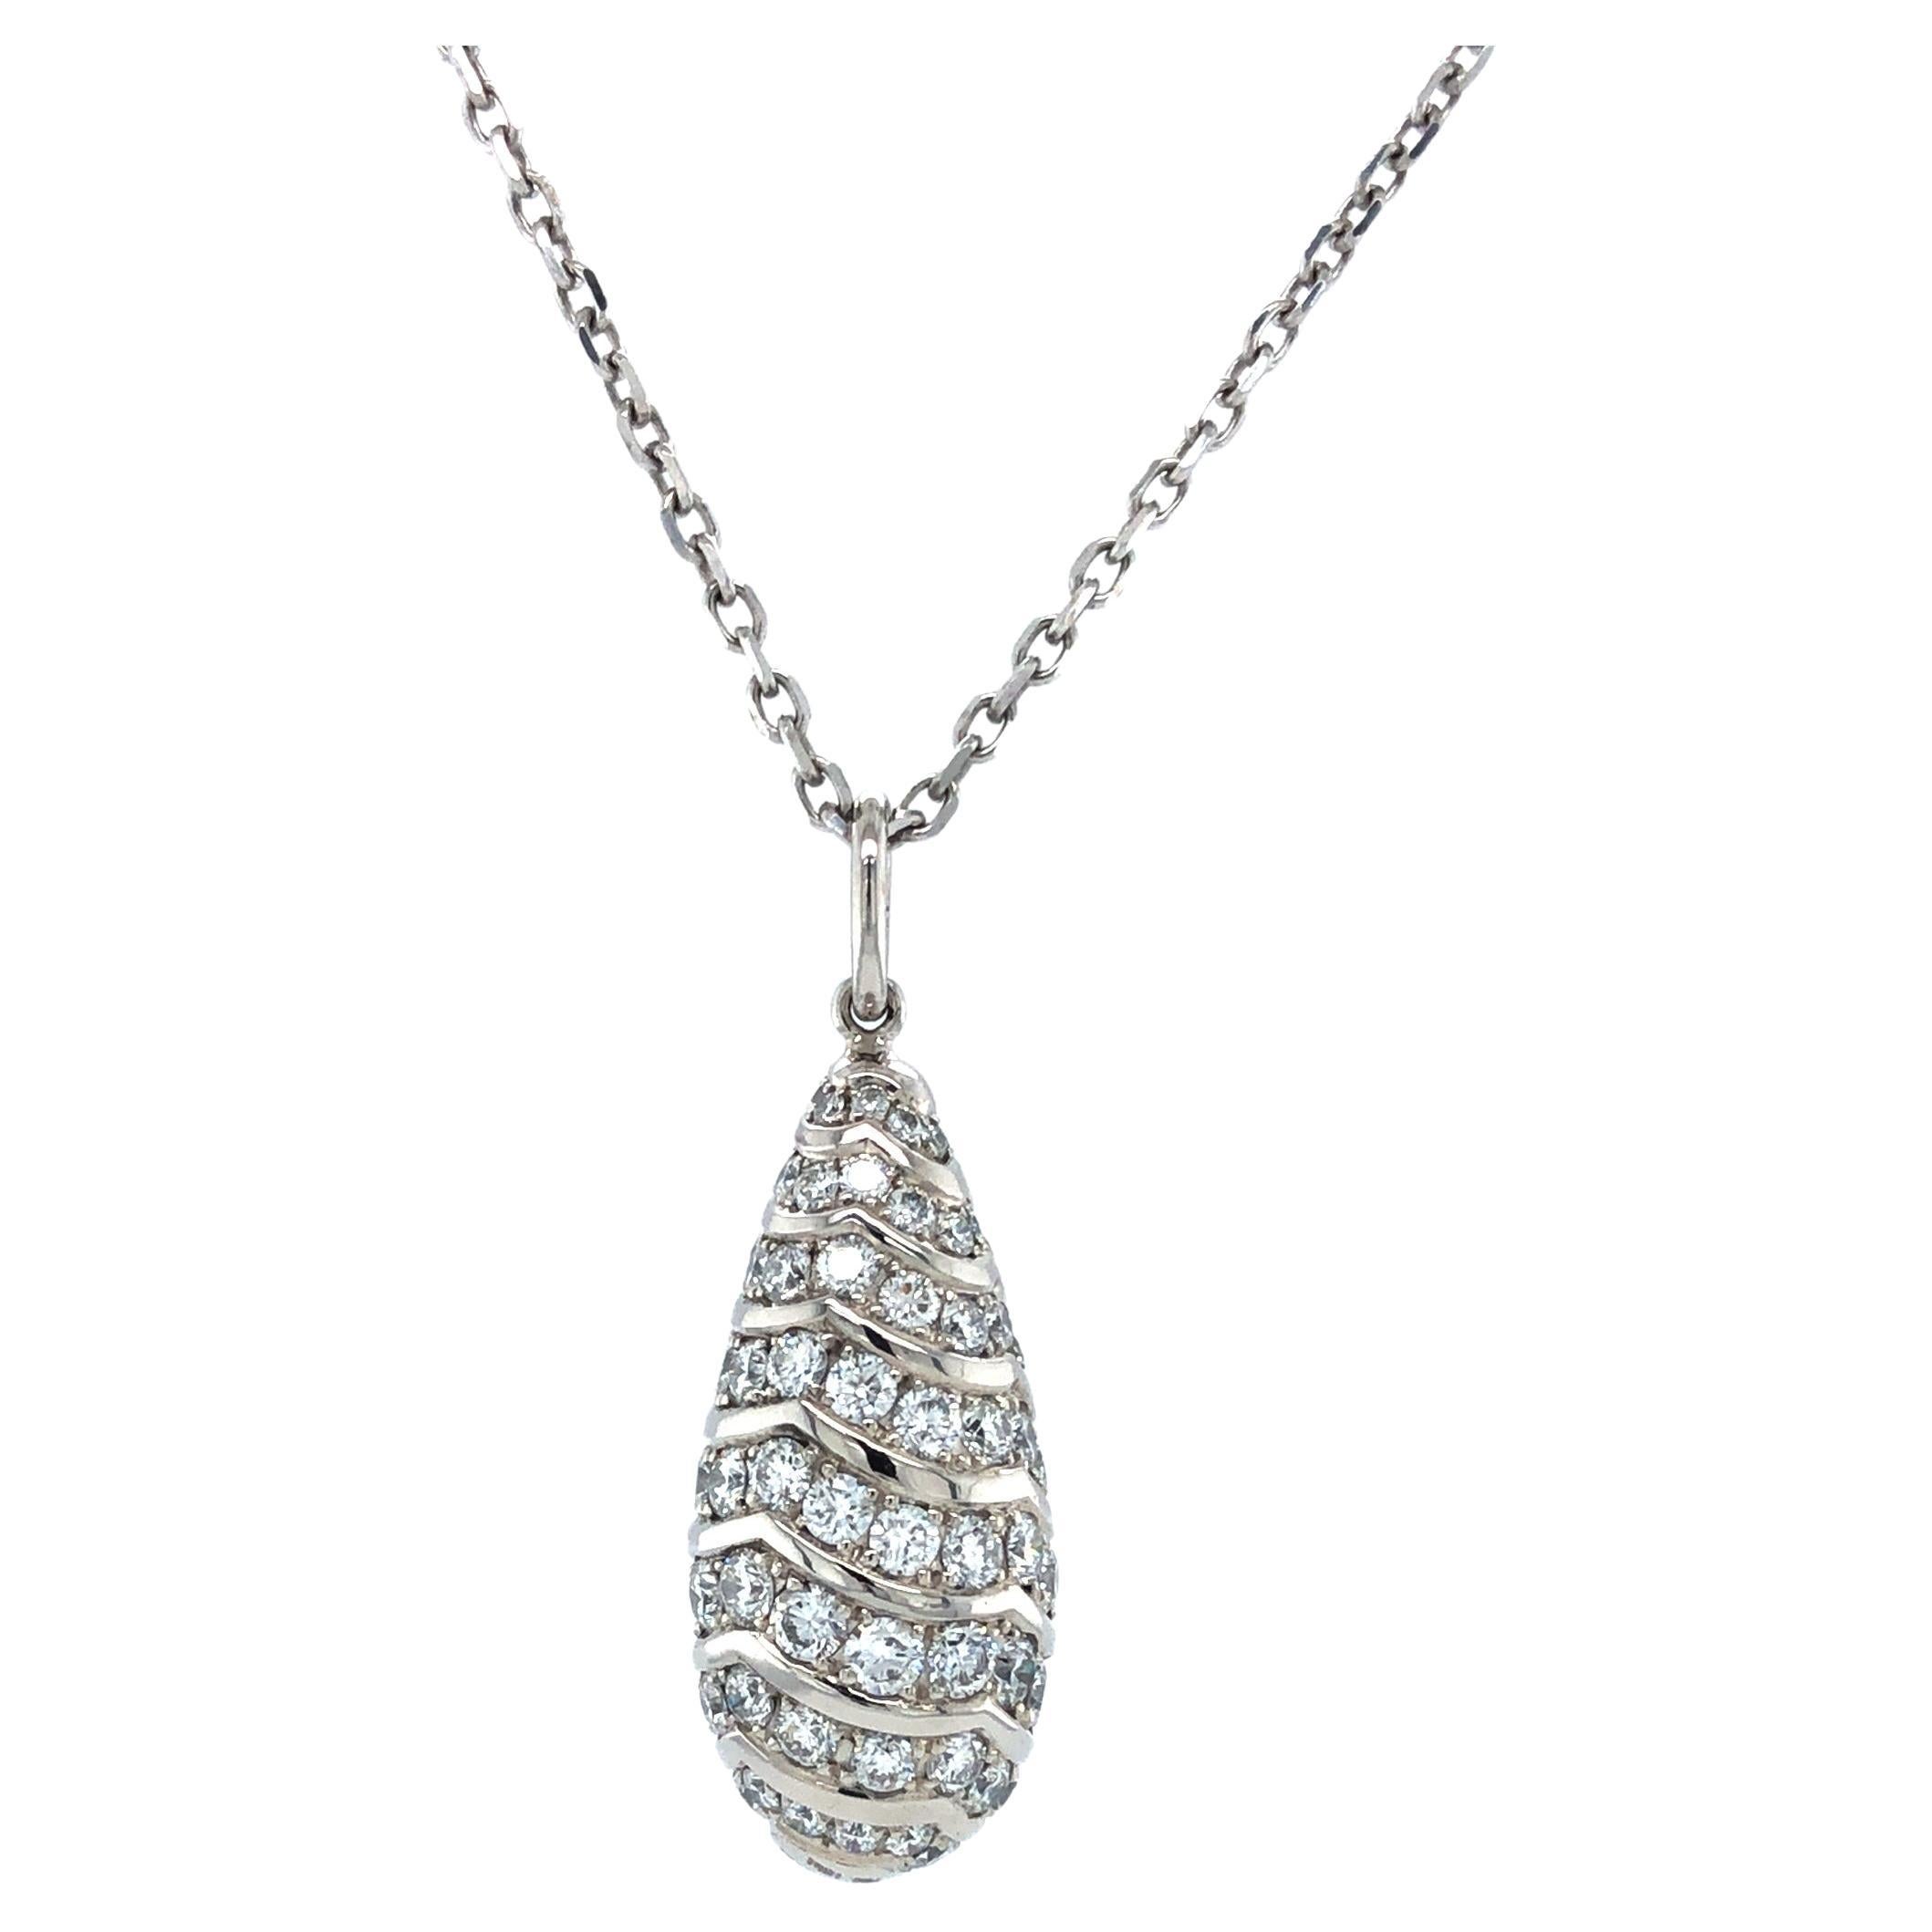 Drop Pendant Necklace - 18k White Gold - 91 Diamonds Total 1.51 ct G VS